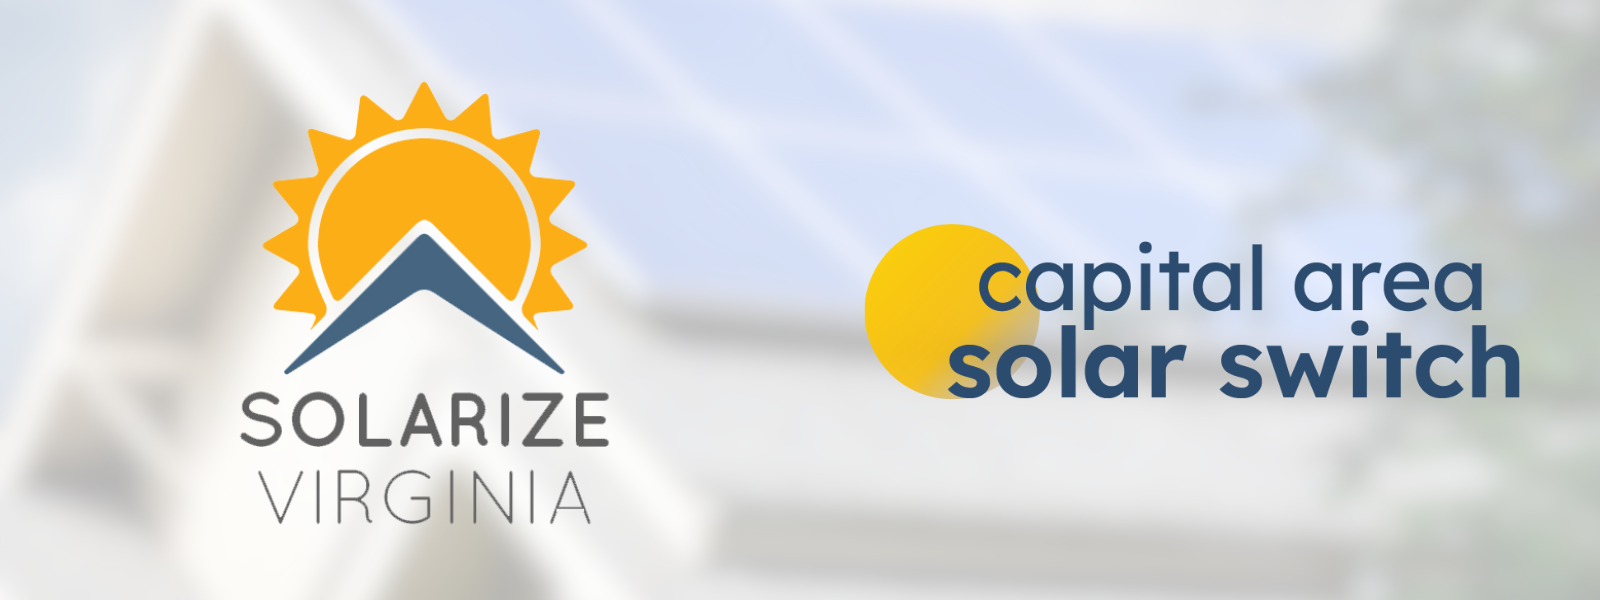 solarize and solar switch logos